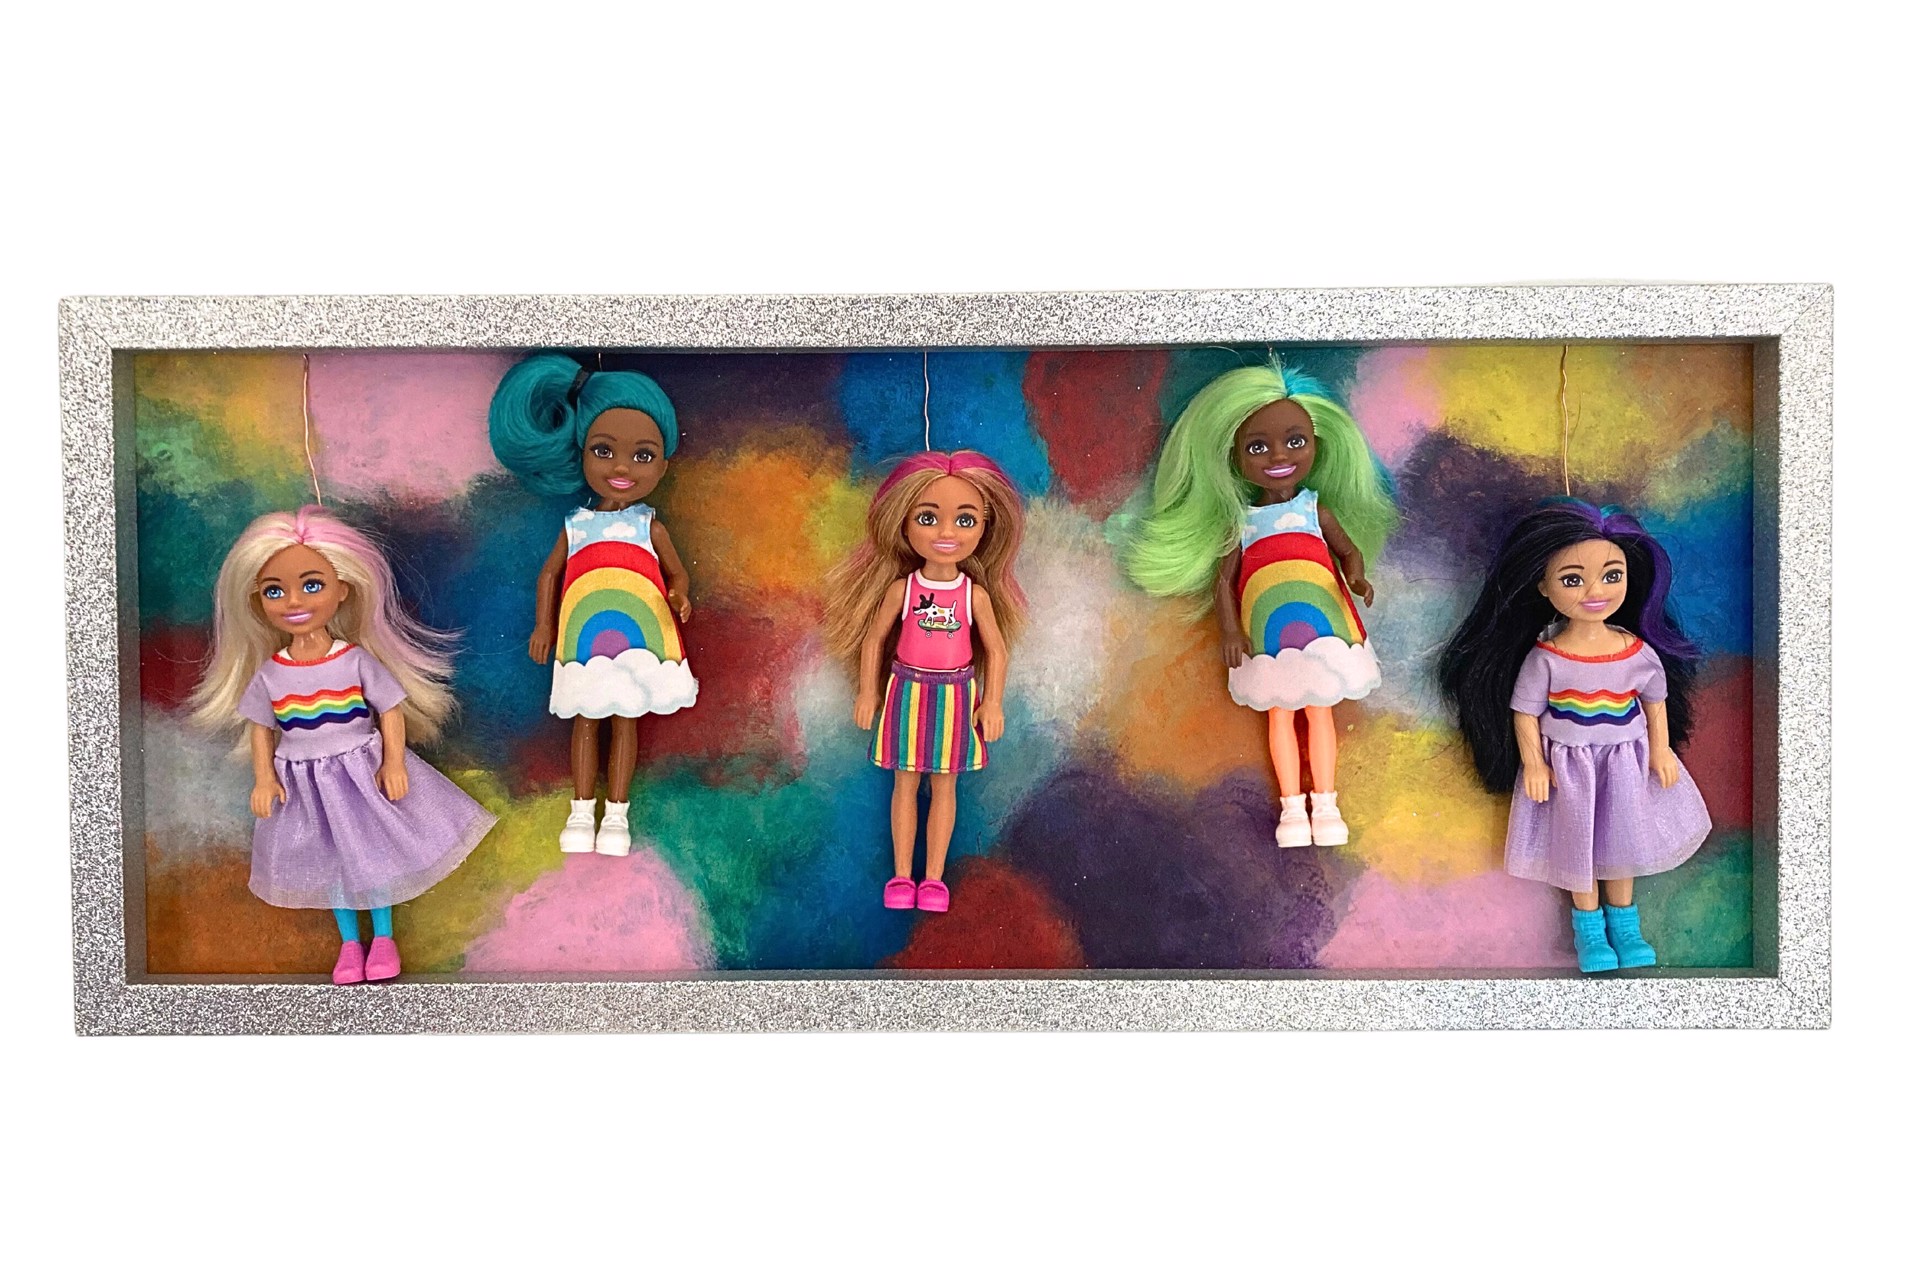 The Rainbow Dolls by Maybellene Gonzalez